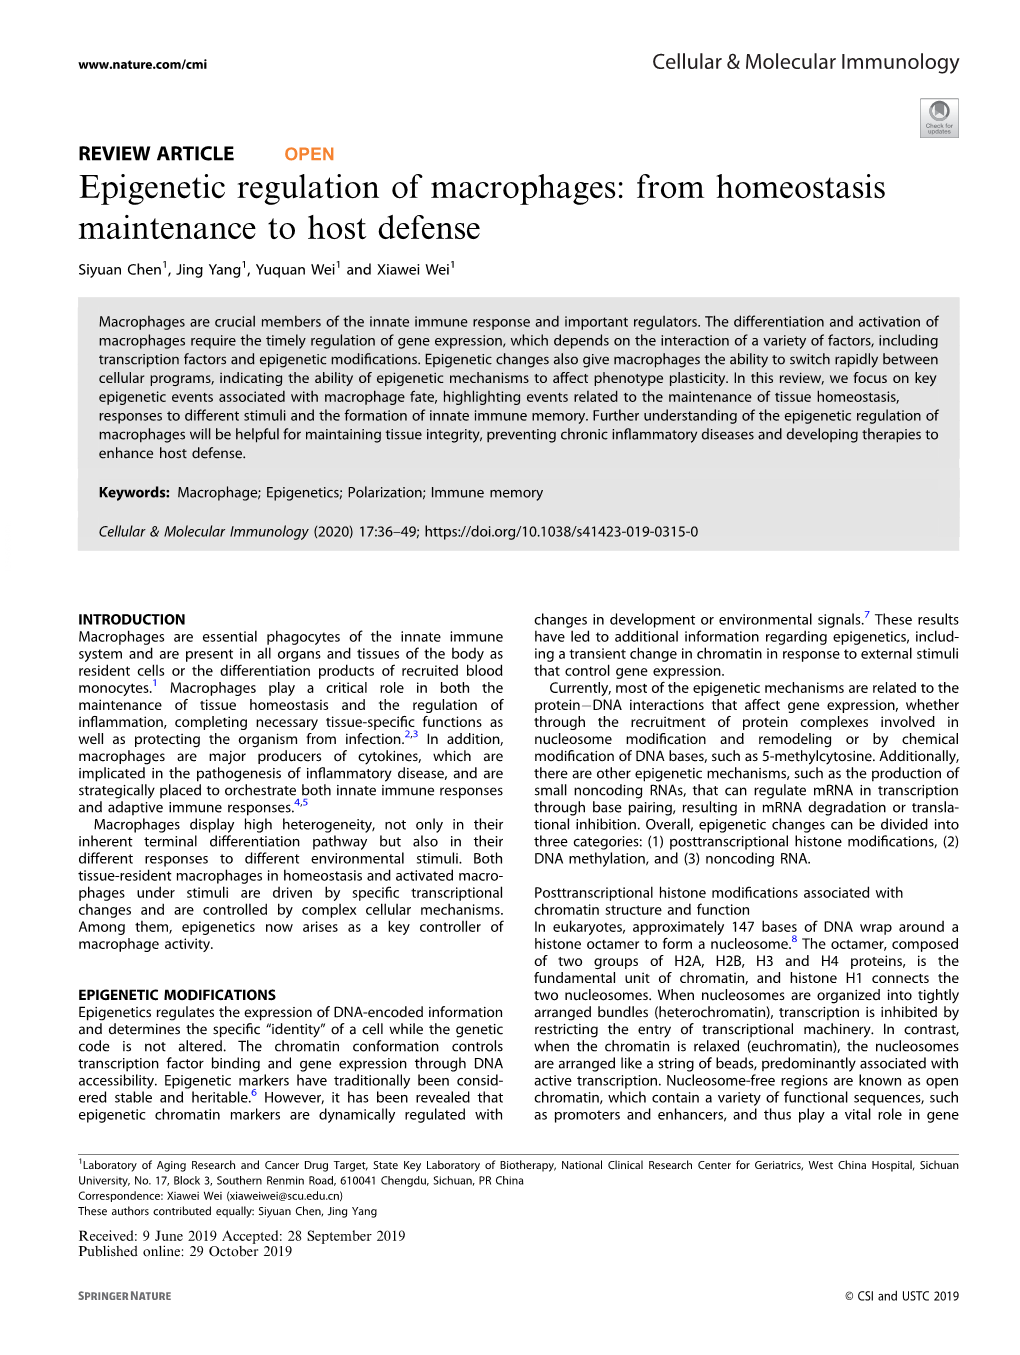 Epigenetic Regulation of Macrophages: from Homeostasis Maintenance to Host Defense